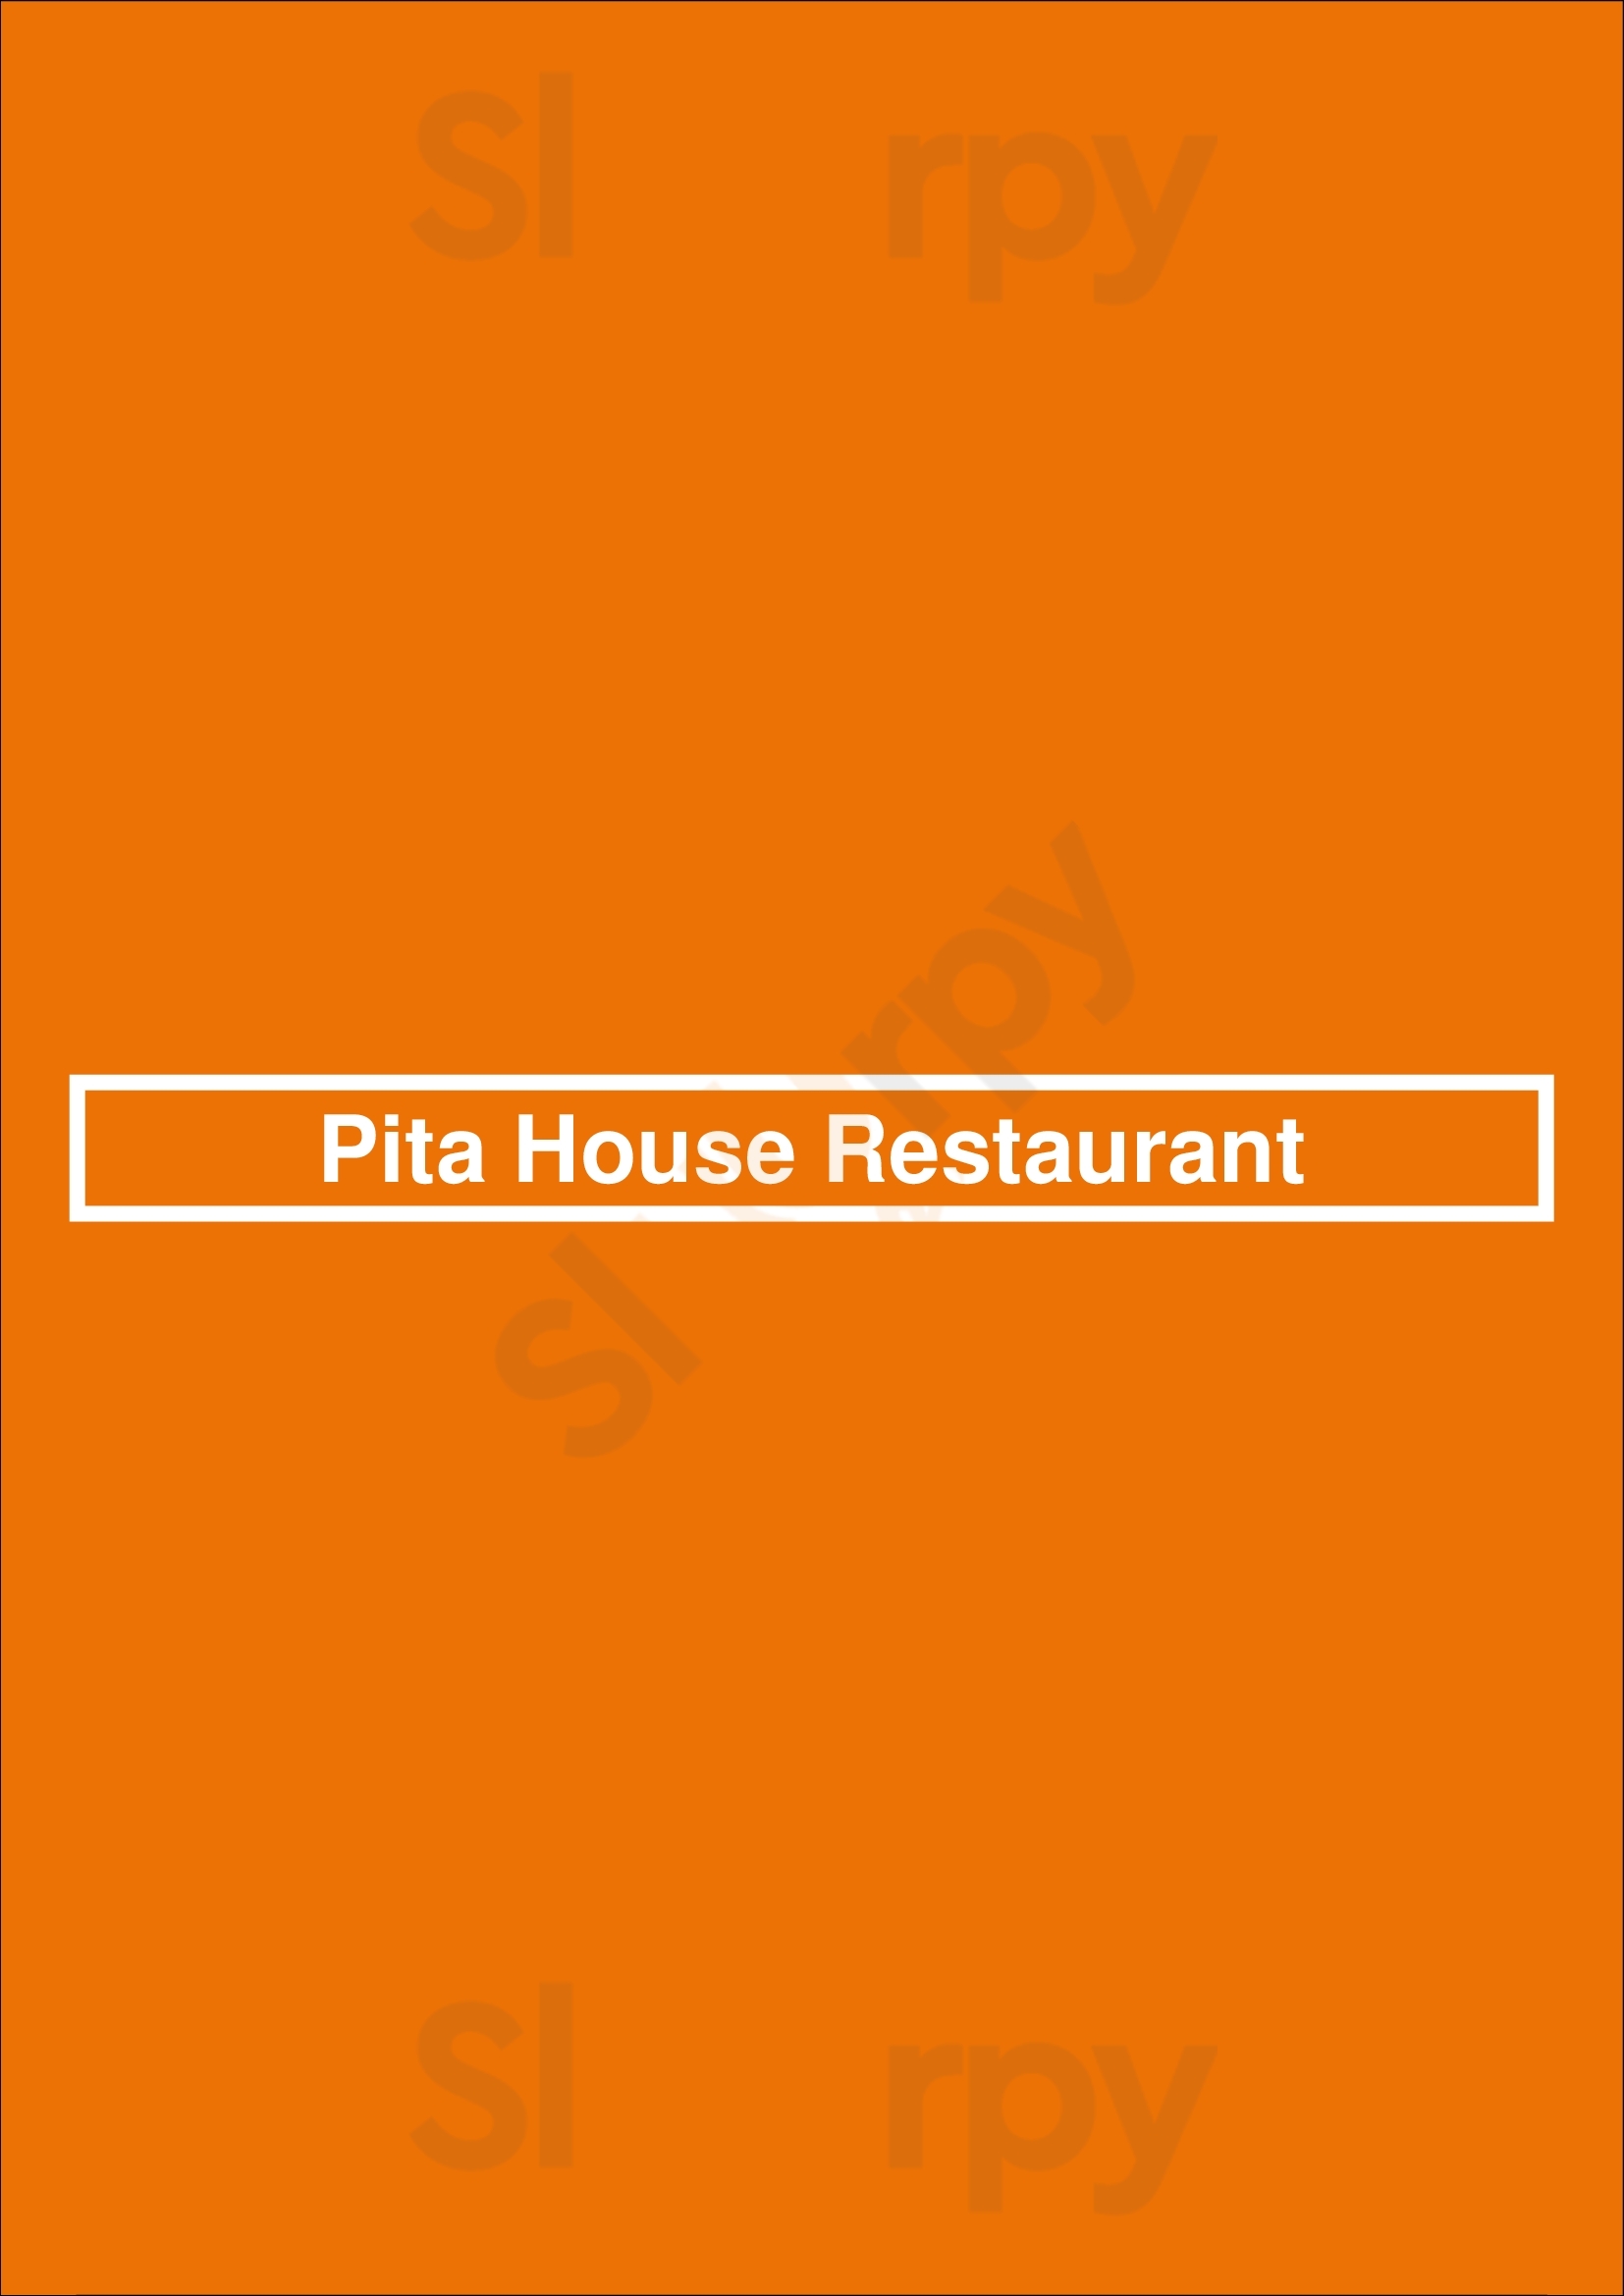 Pita House Restaurant Vancouver Menu - 1